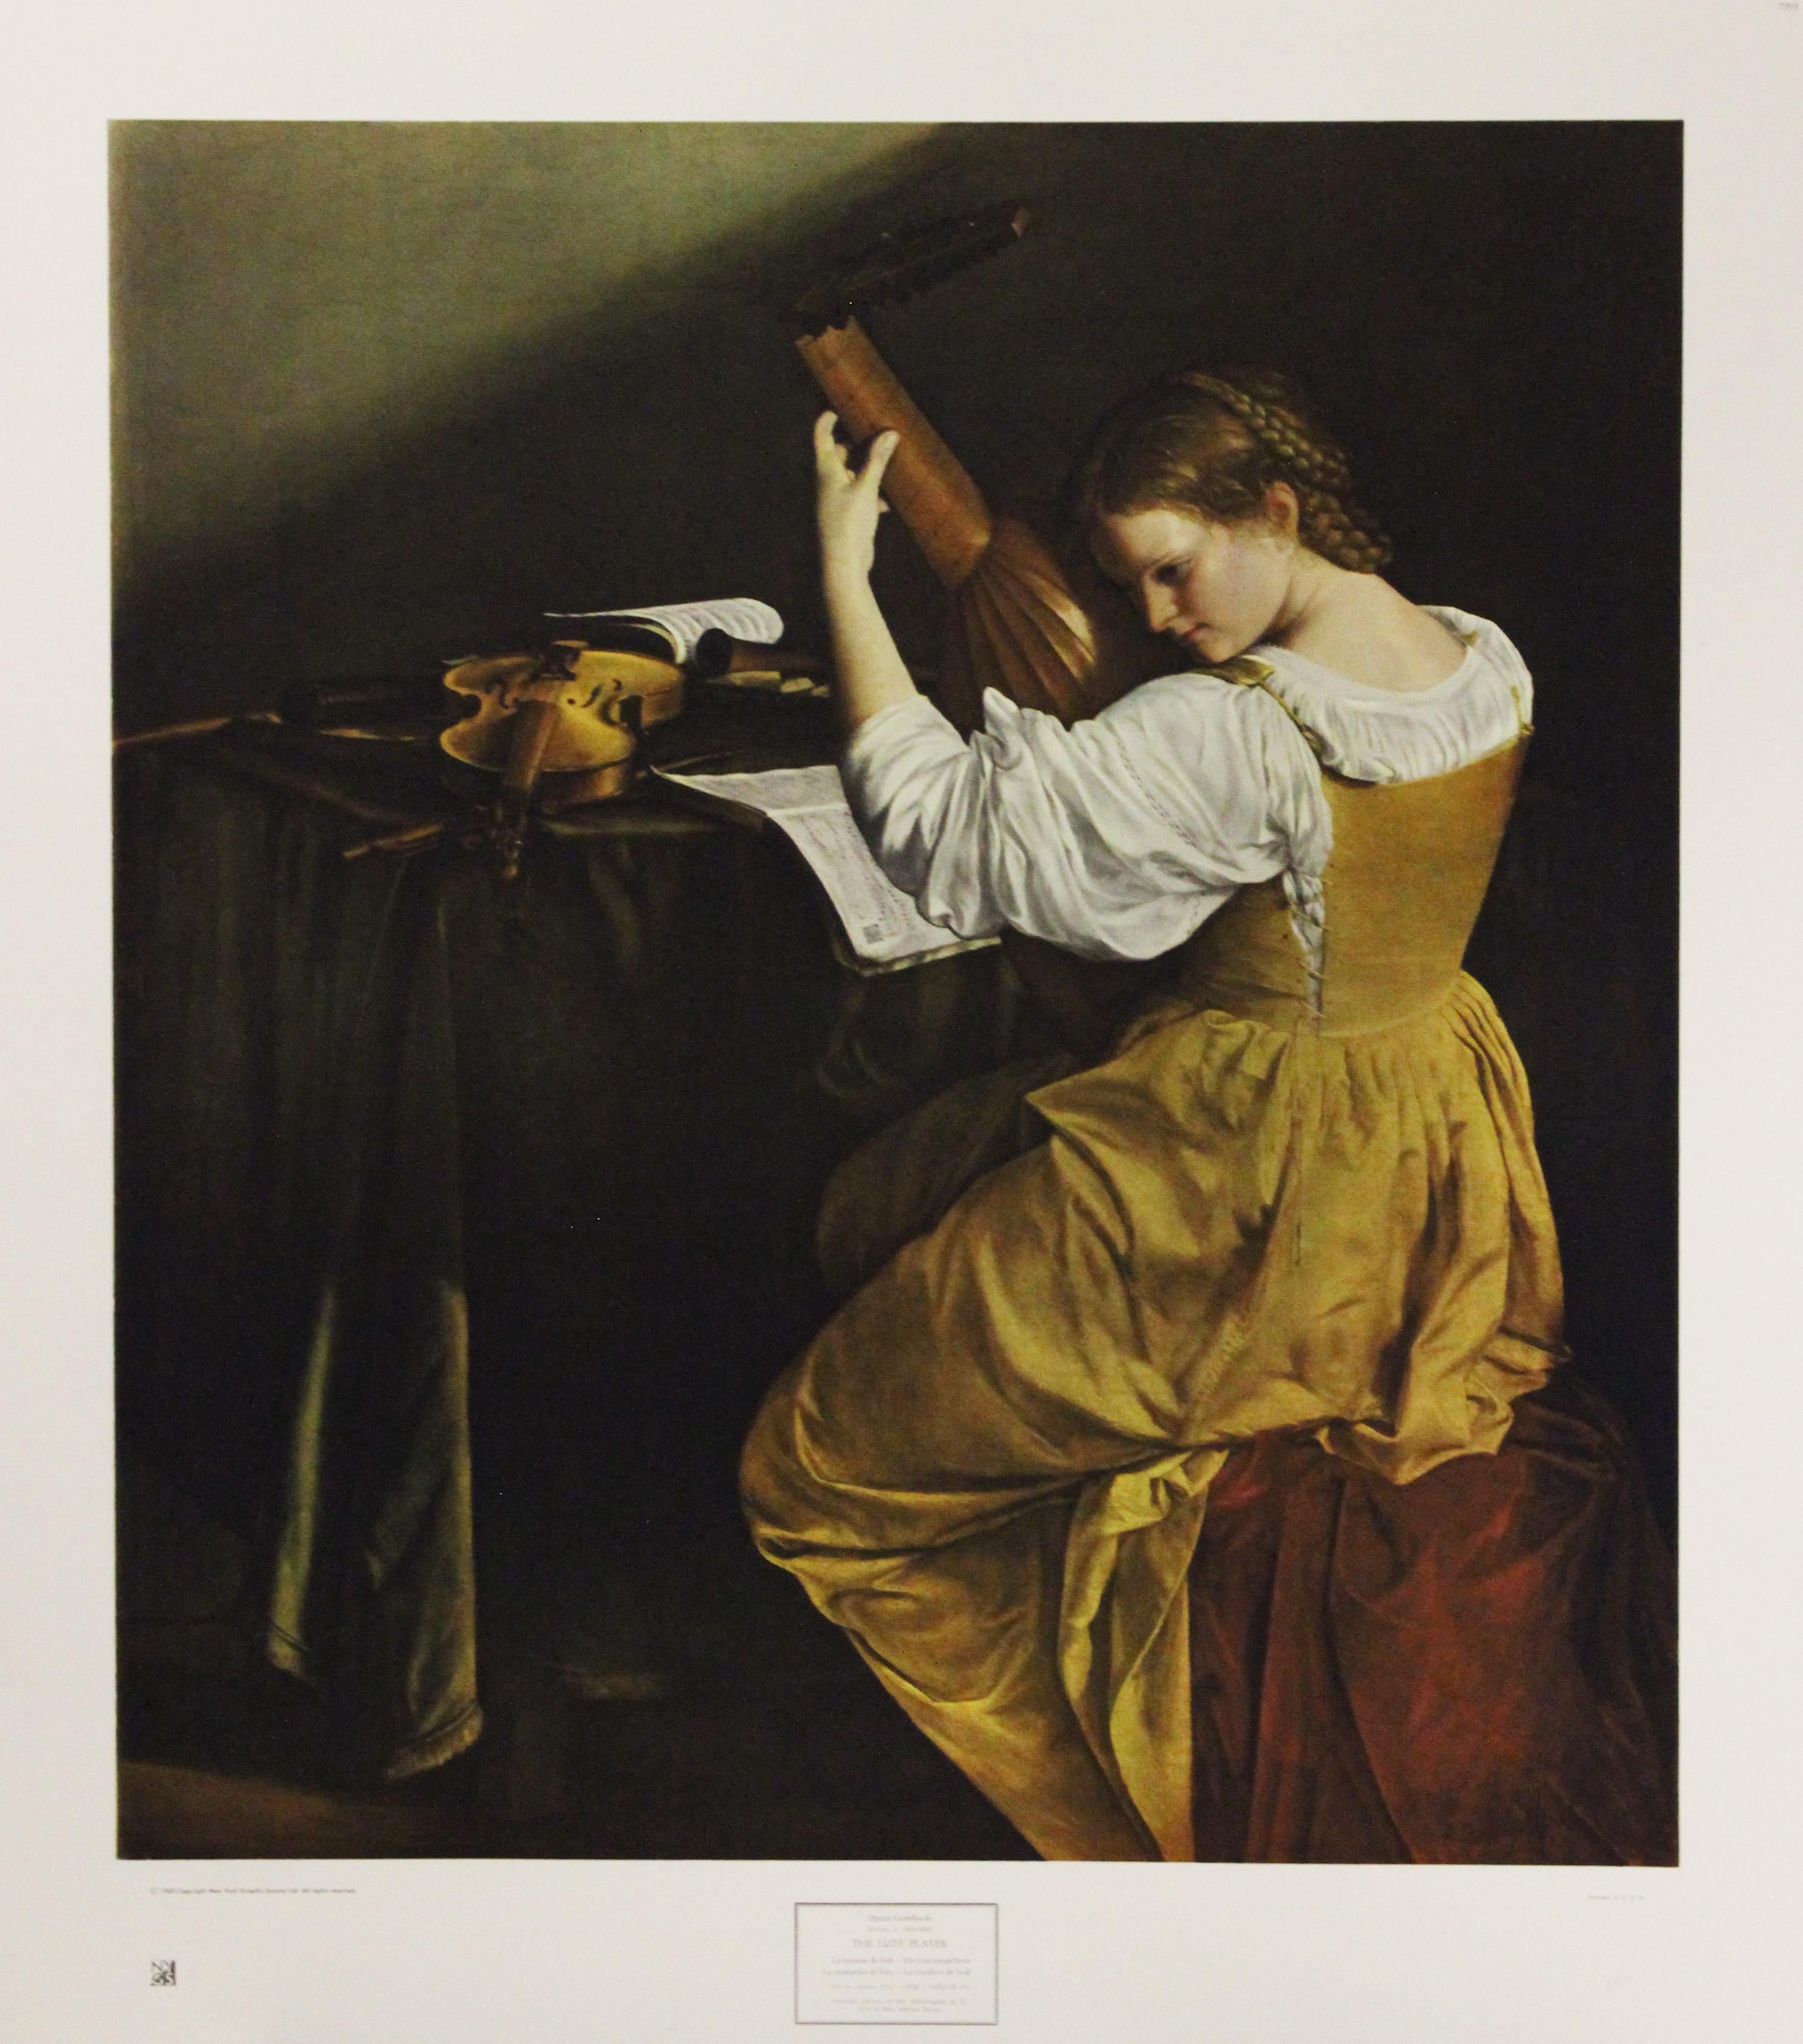 Orazio Gentileschi Portrait Print - The Lute Player-Poster. New York Graphic Society Ltd. 